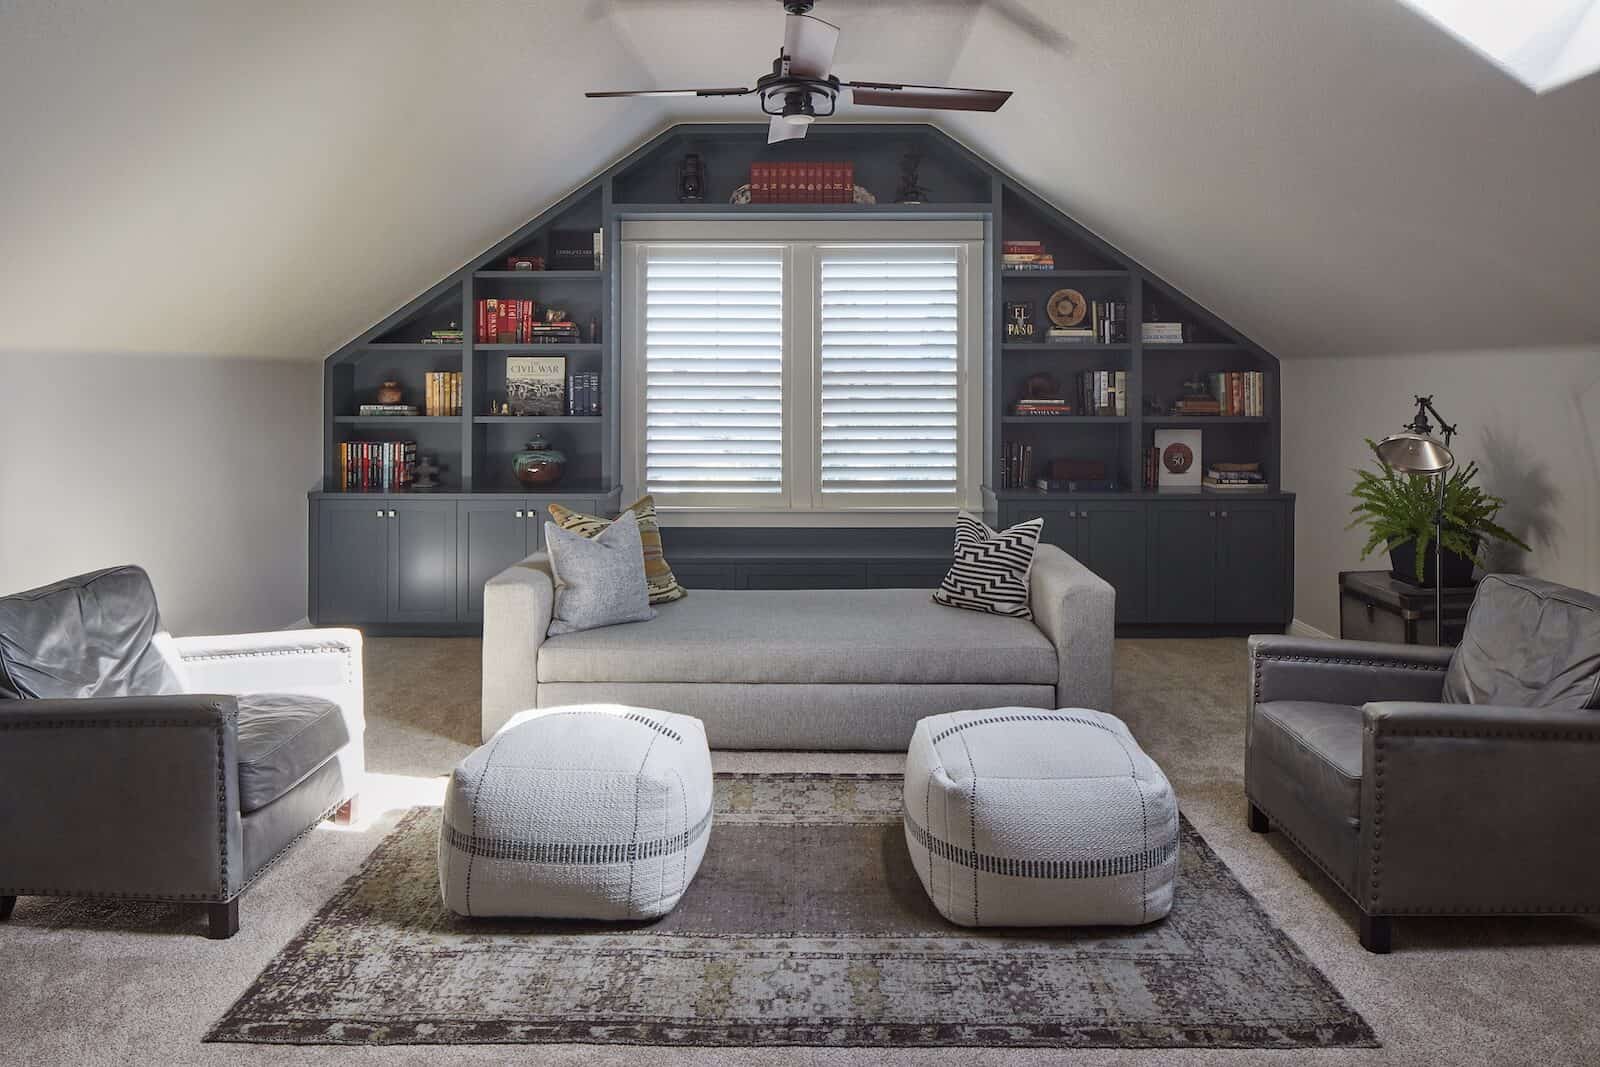 Bonus room with built in book cases, carpet and furniture